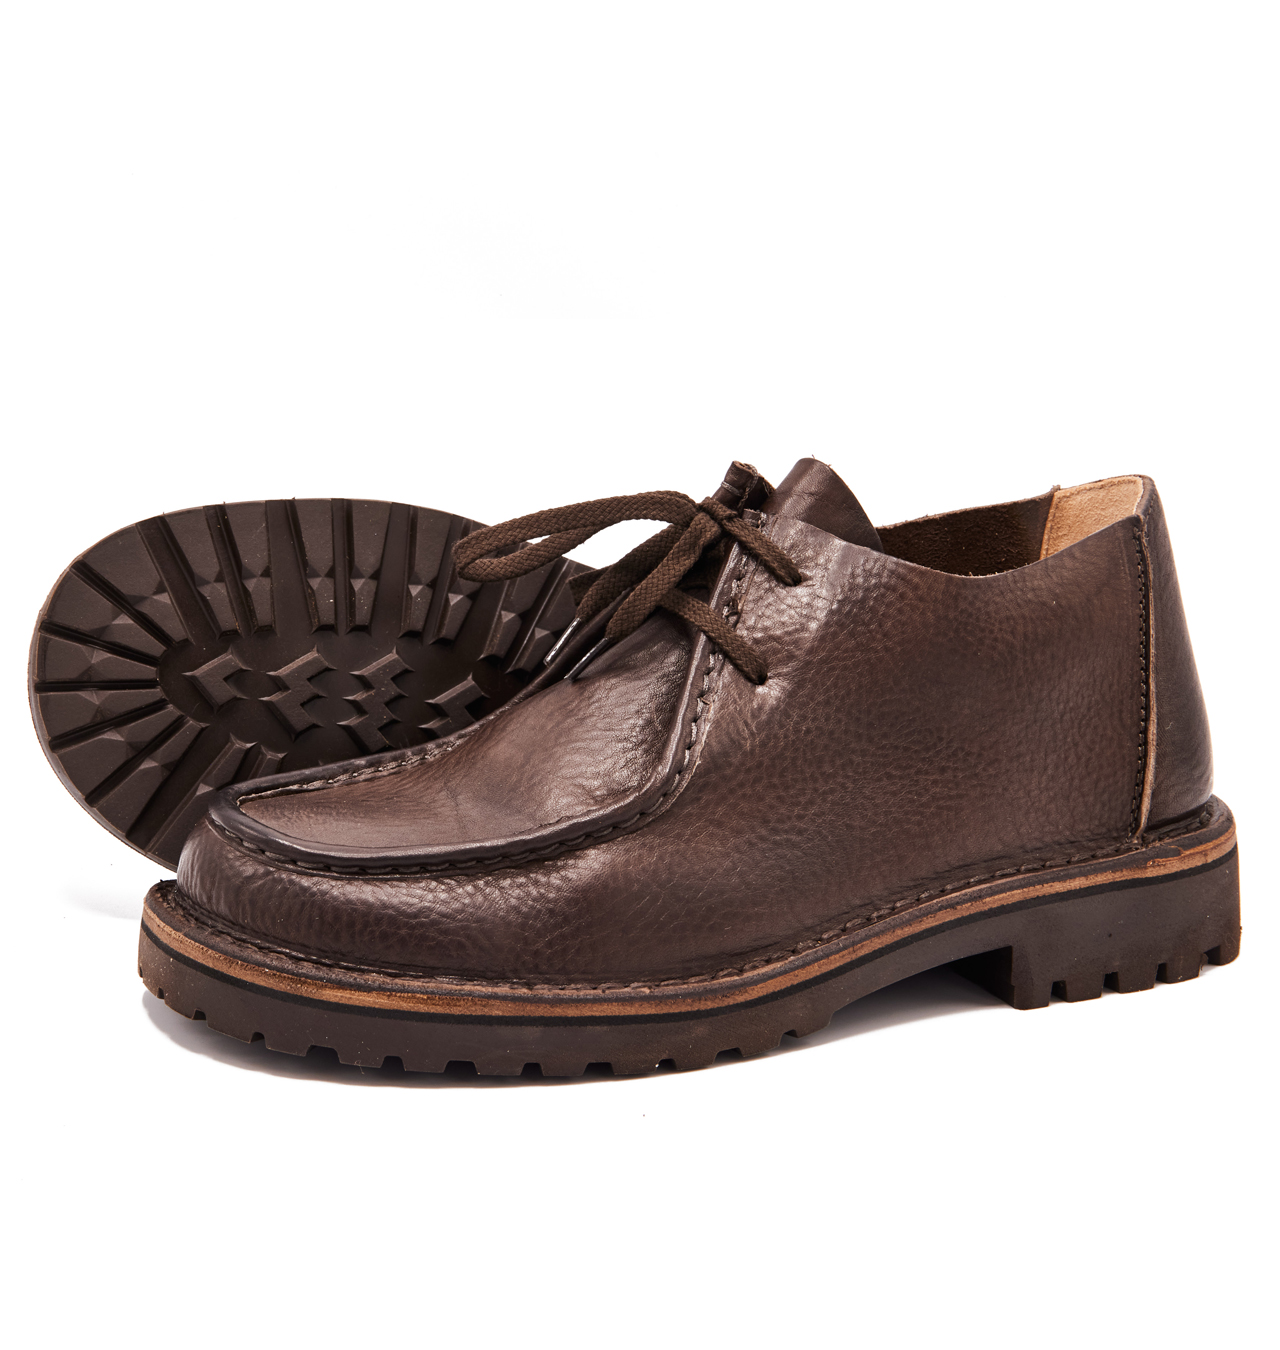 Astorflex---Beenflex-Leather-Moccasin-Shoe---Coffee1